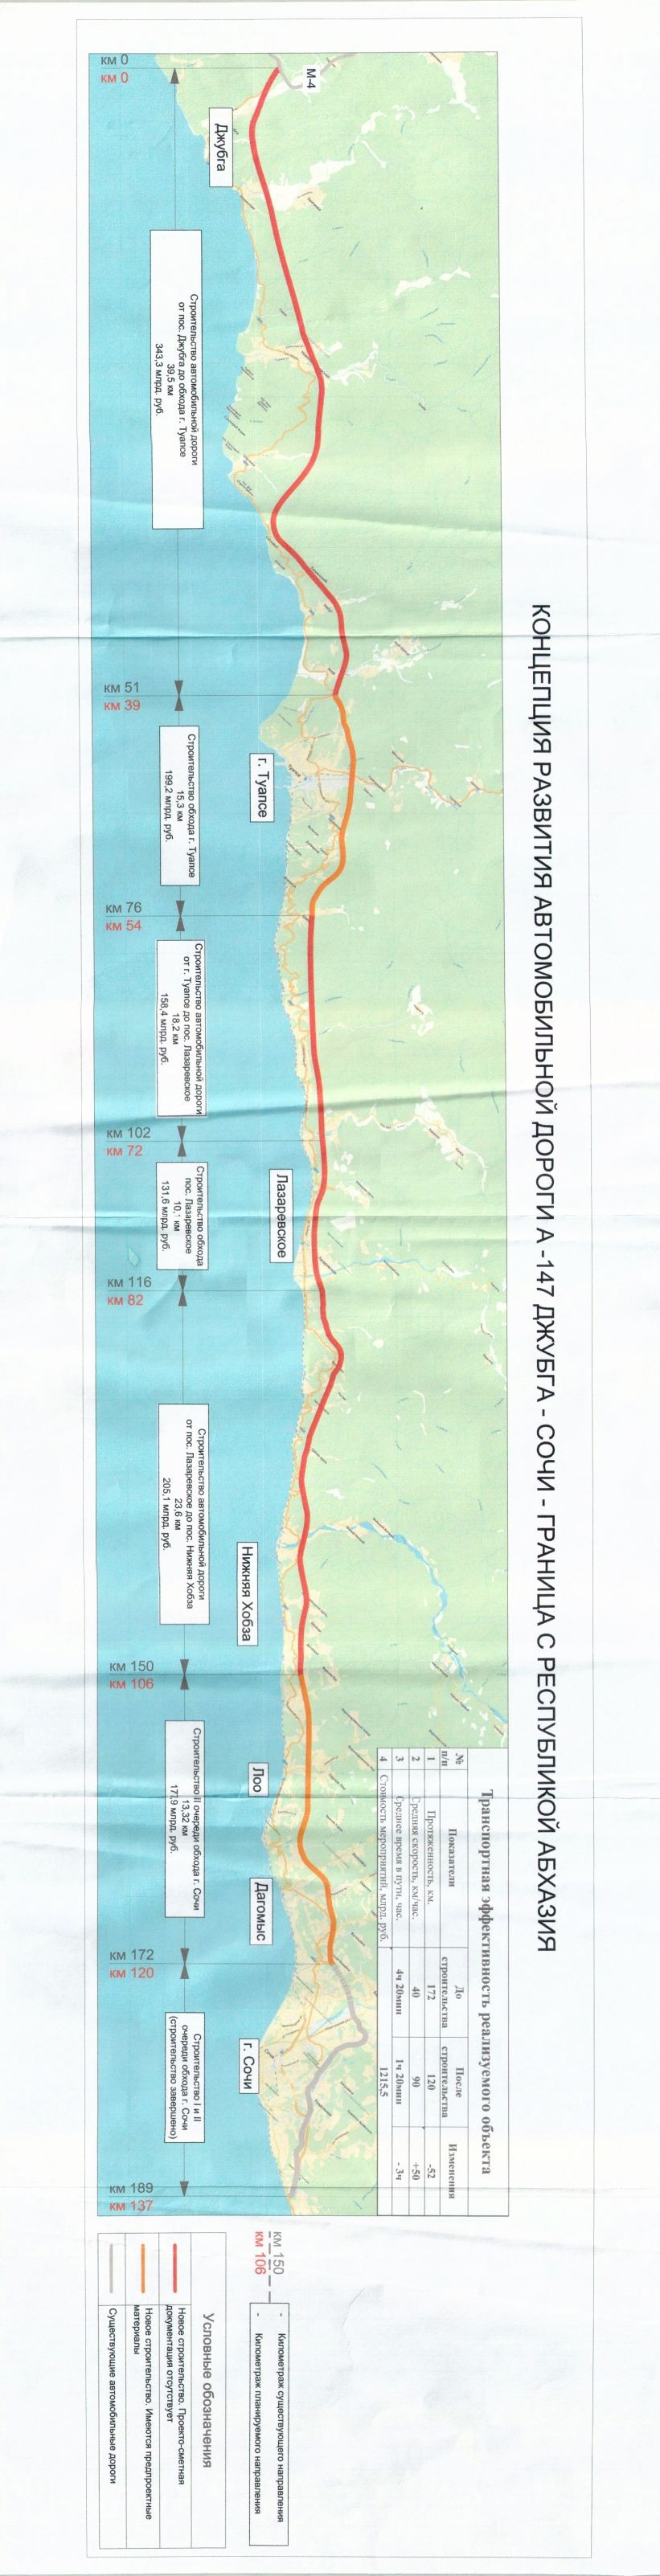 Проект новой дороги джубга сочи на карте. А-147 Джубга-Сочи. План трассы Джубга Сочи. Дорога Джубга Сочи на карте проект. Строительство новой трассы Джубга Сочи на карте.